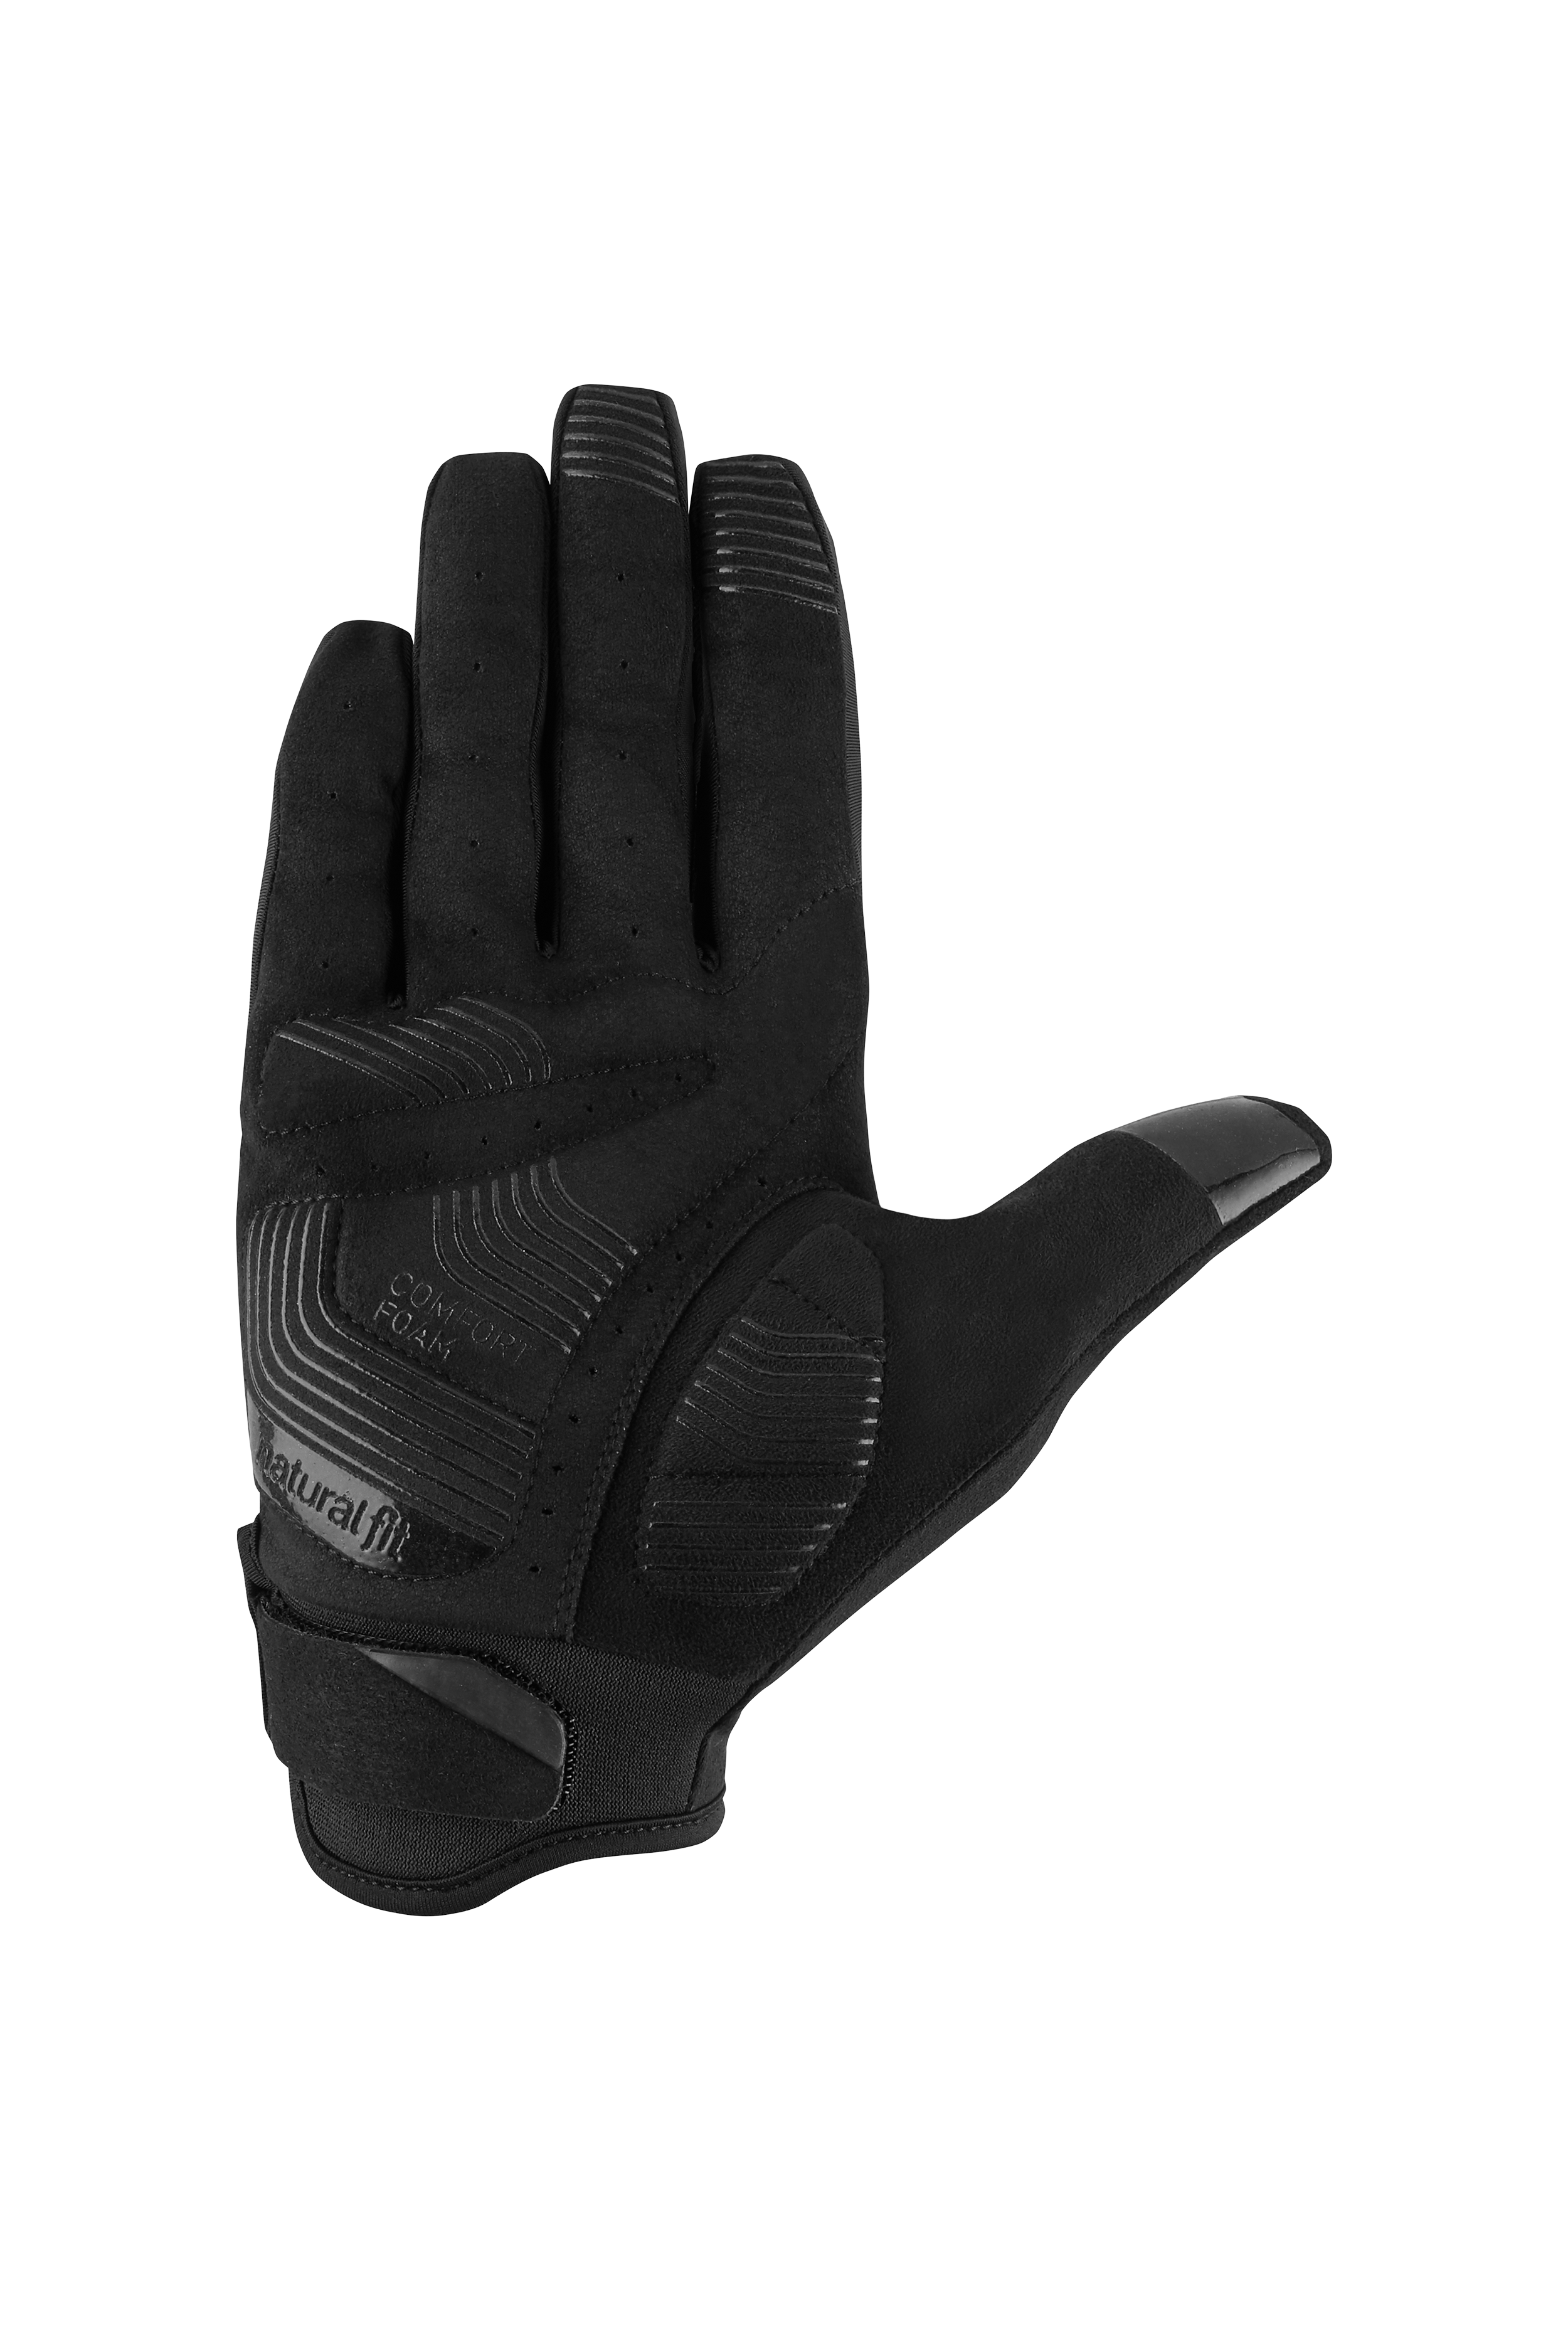 Handschuhe langfinger X NF (L (9))